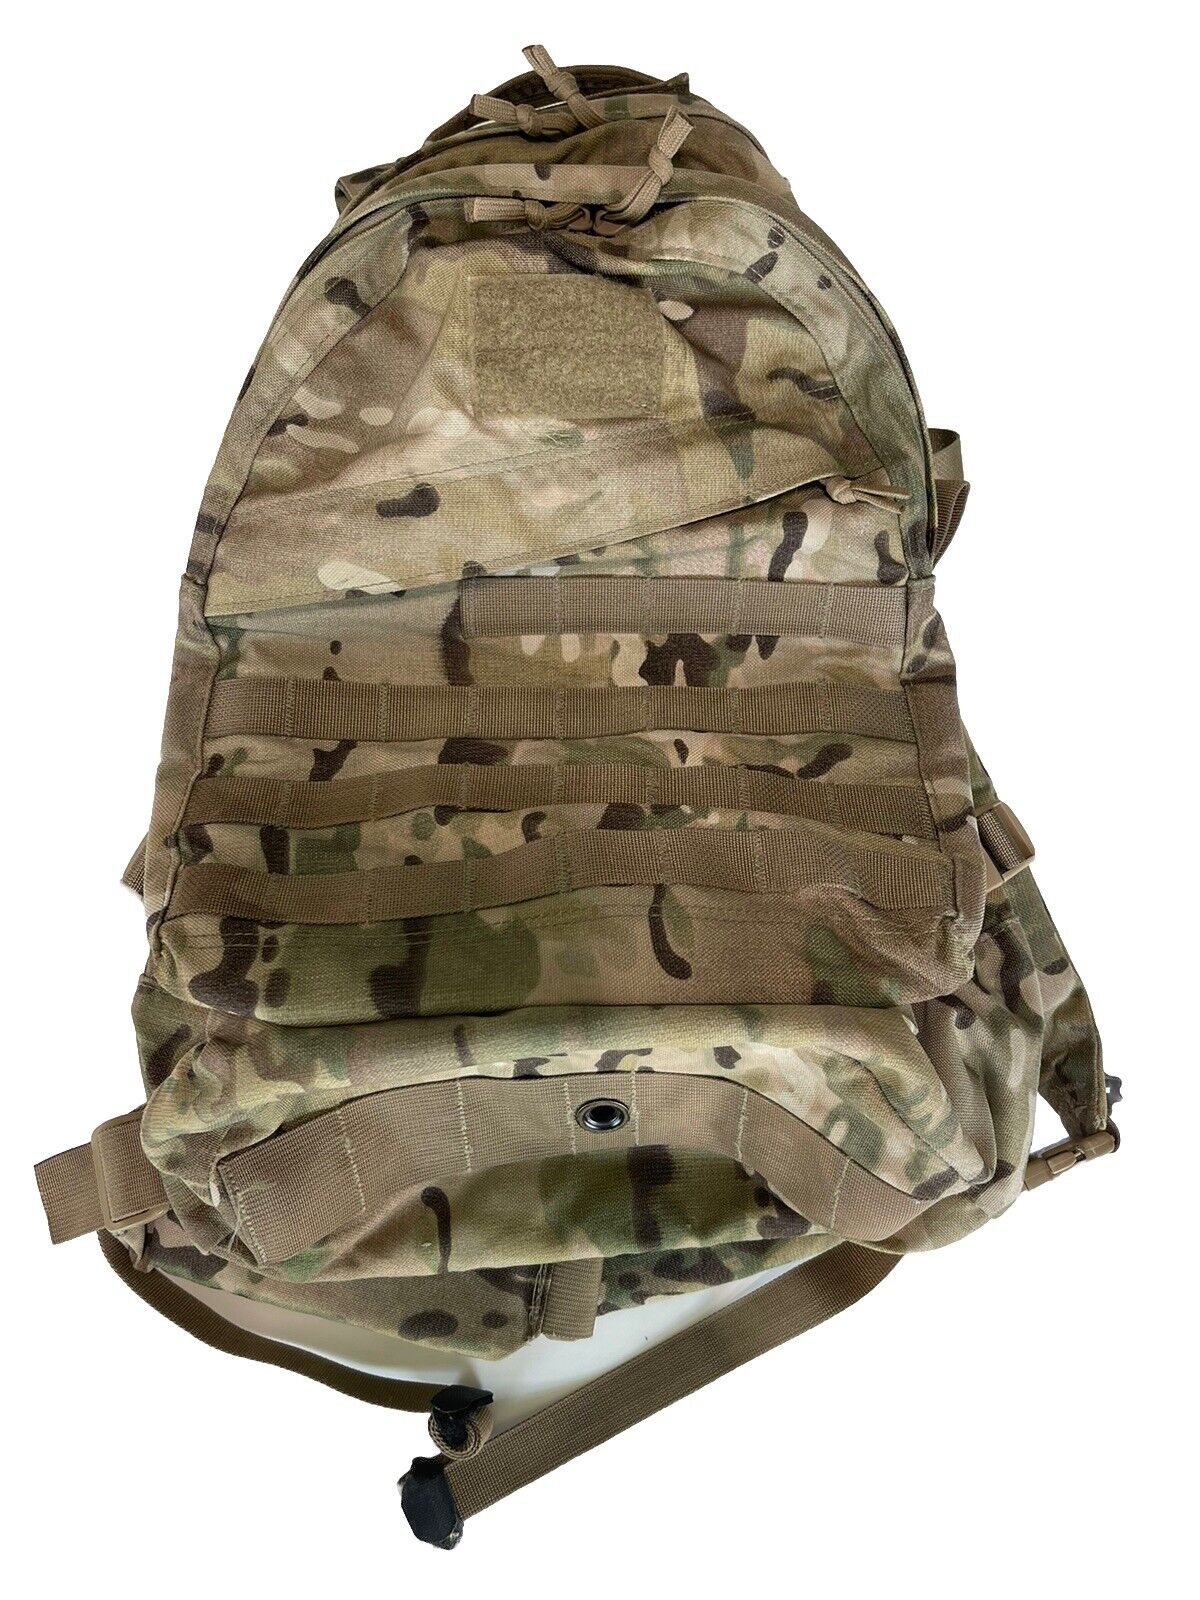 London Bridge Trading LBT-1476A V3 Three Day Assault Pack Multicam Backpack ACU